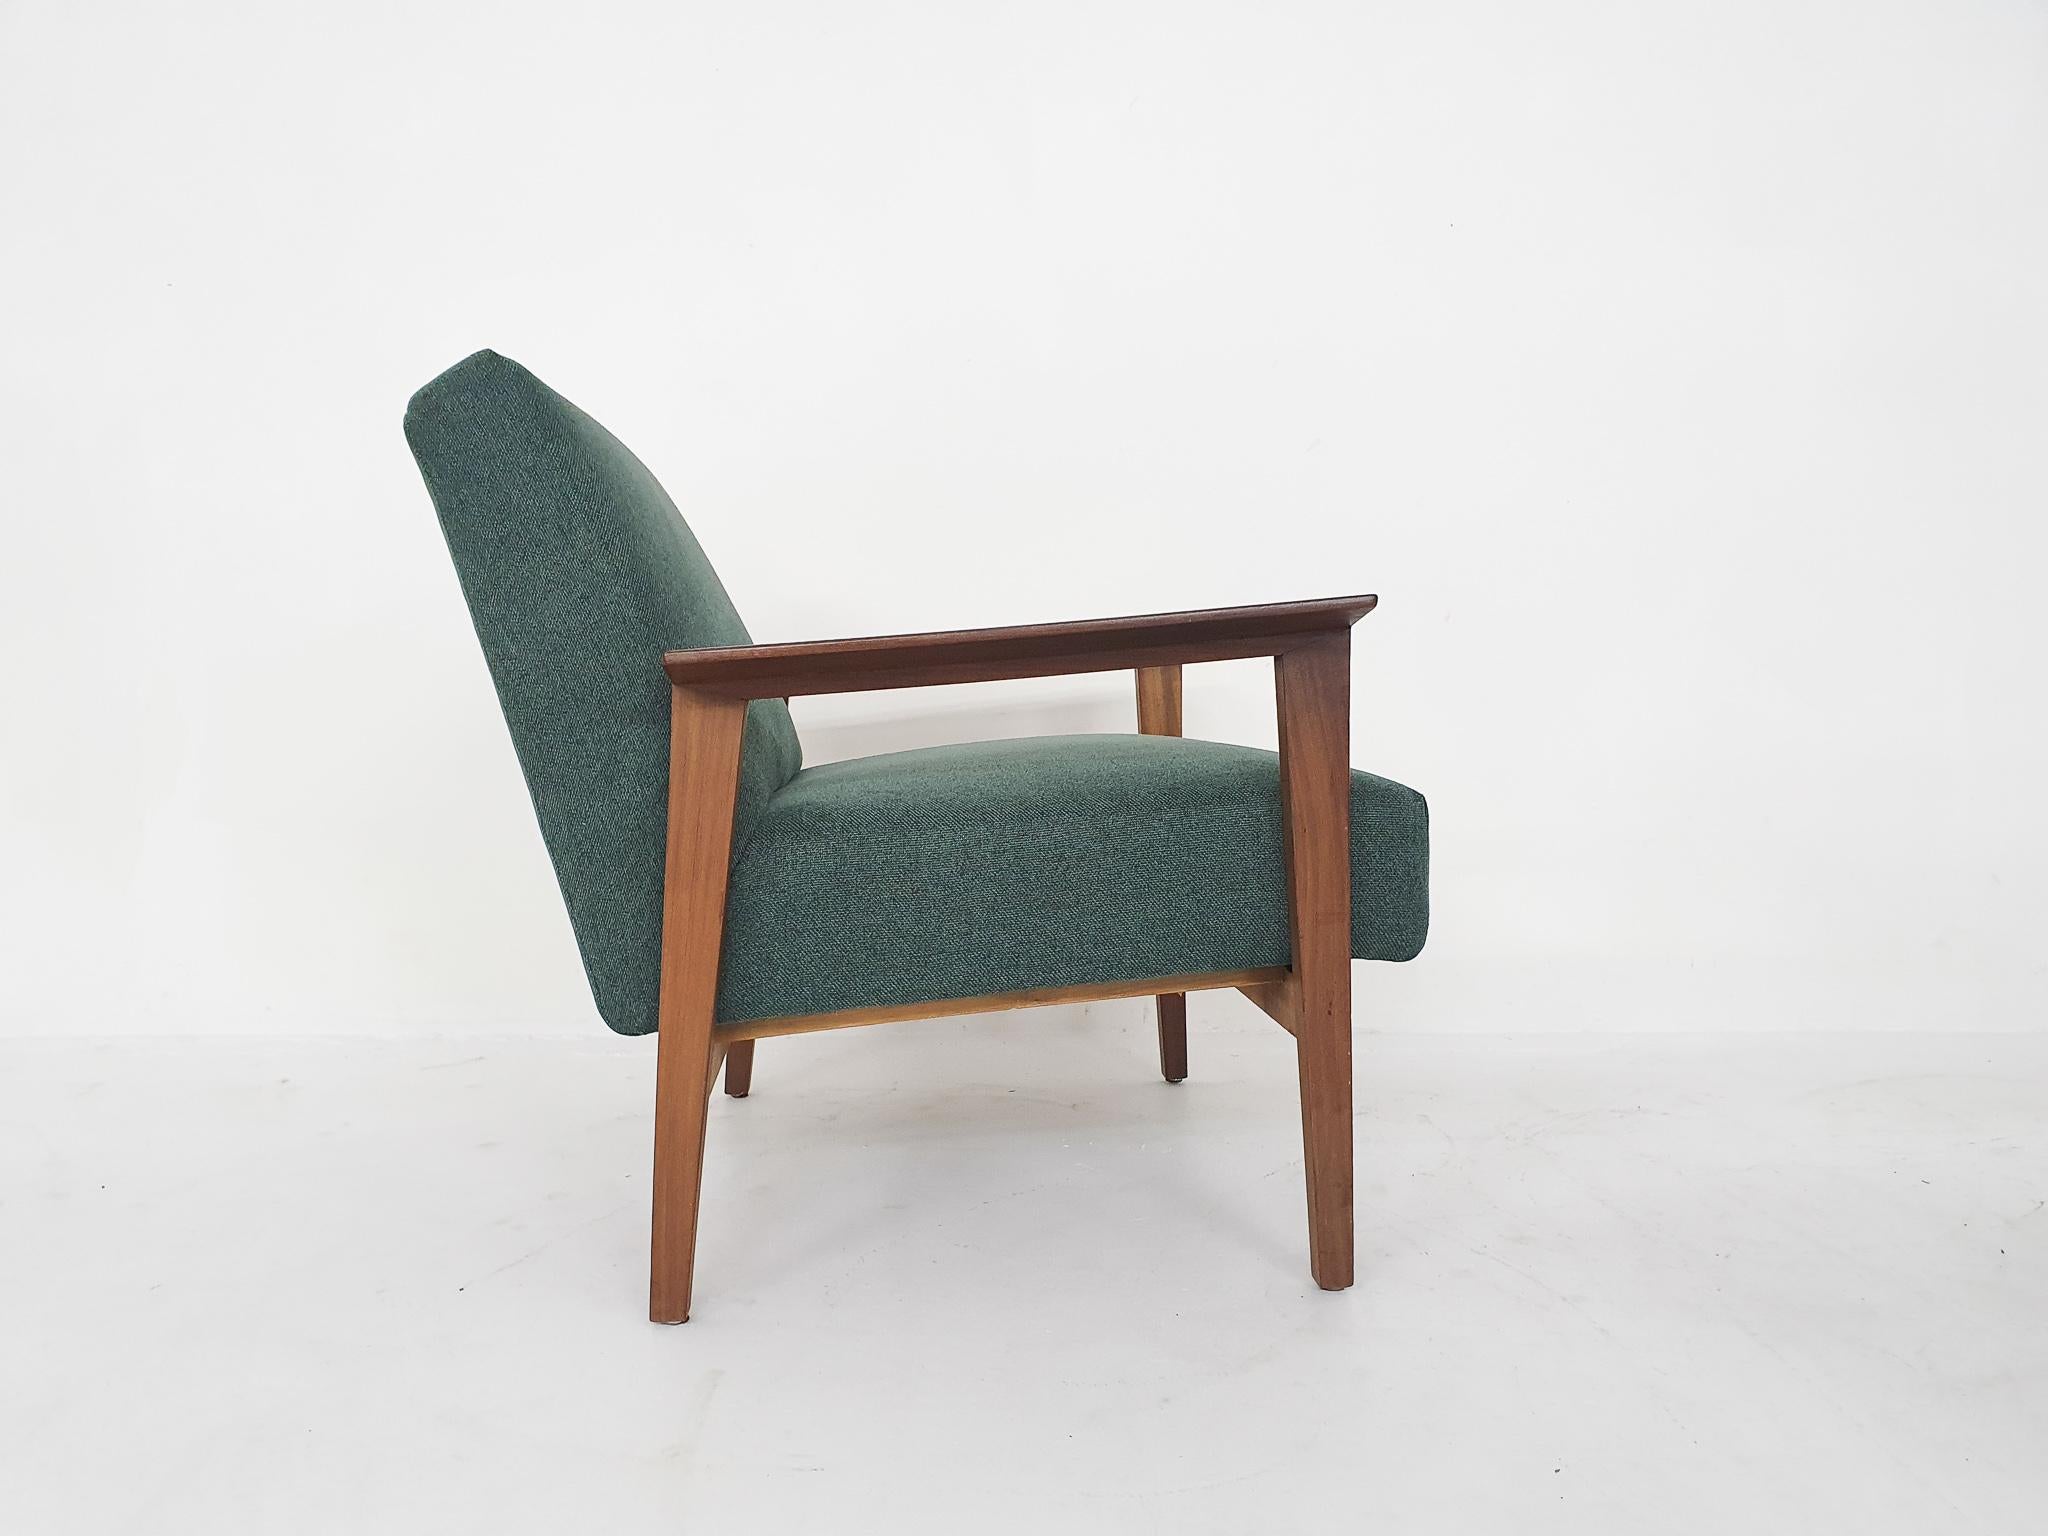 Fabric Scandinavian Modern Teak Arm Chairs with New Green Upholstery, 1960's